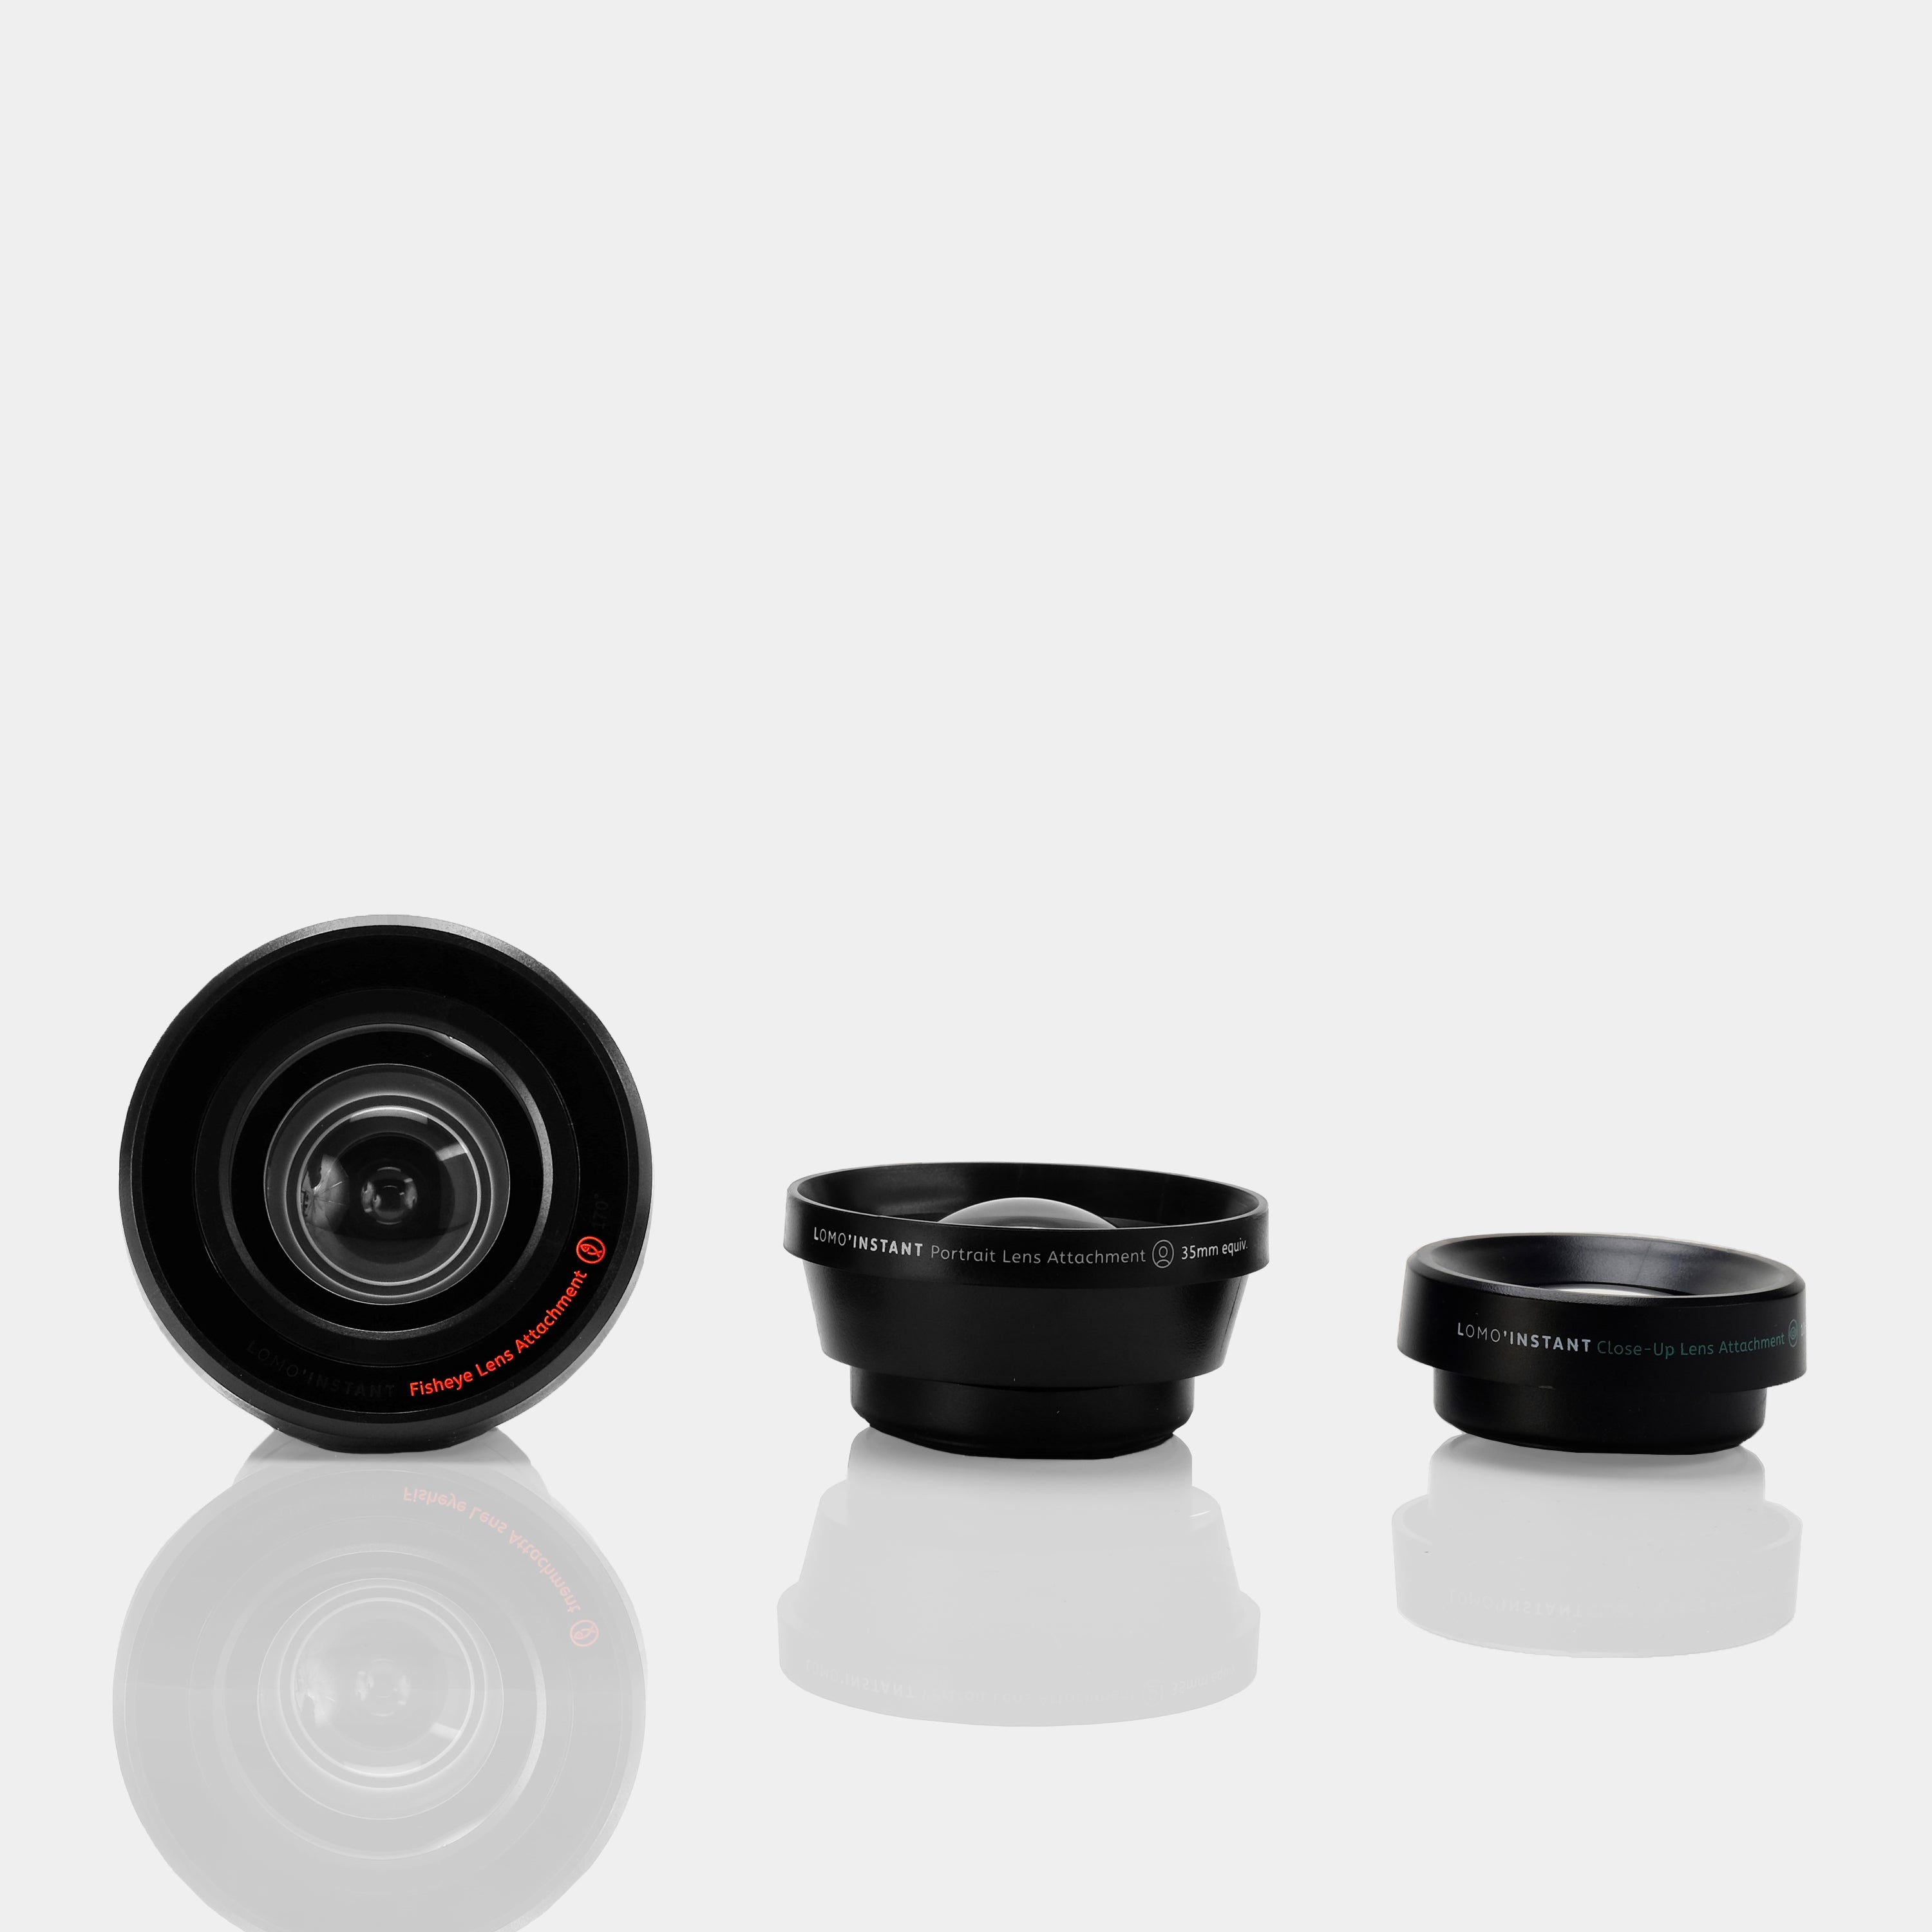 Lomography Lomo'Instant Instax Mini (Gongkan Edition) Instant Film Camera and Lenses